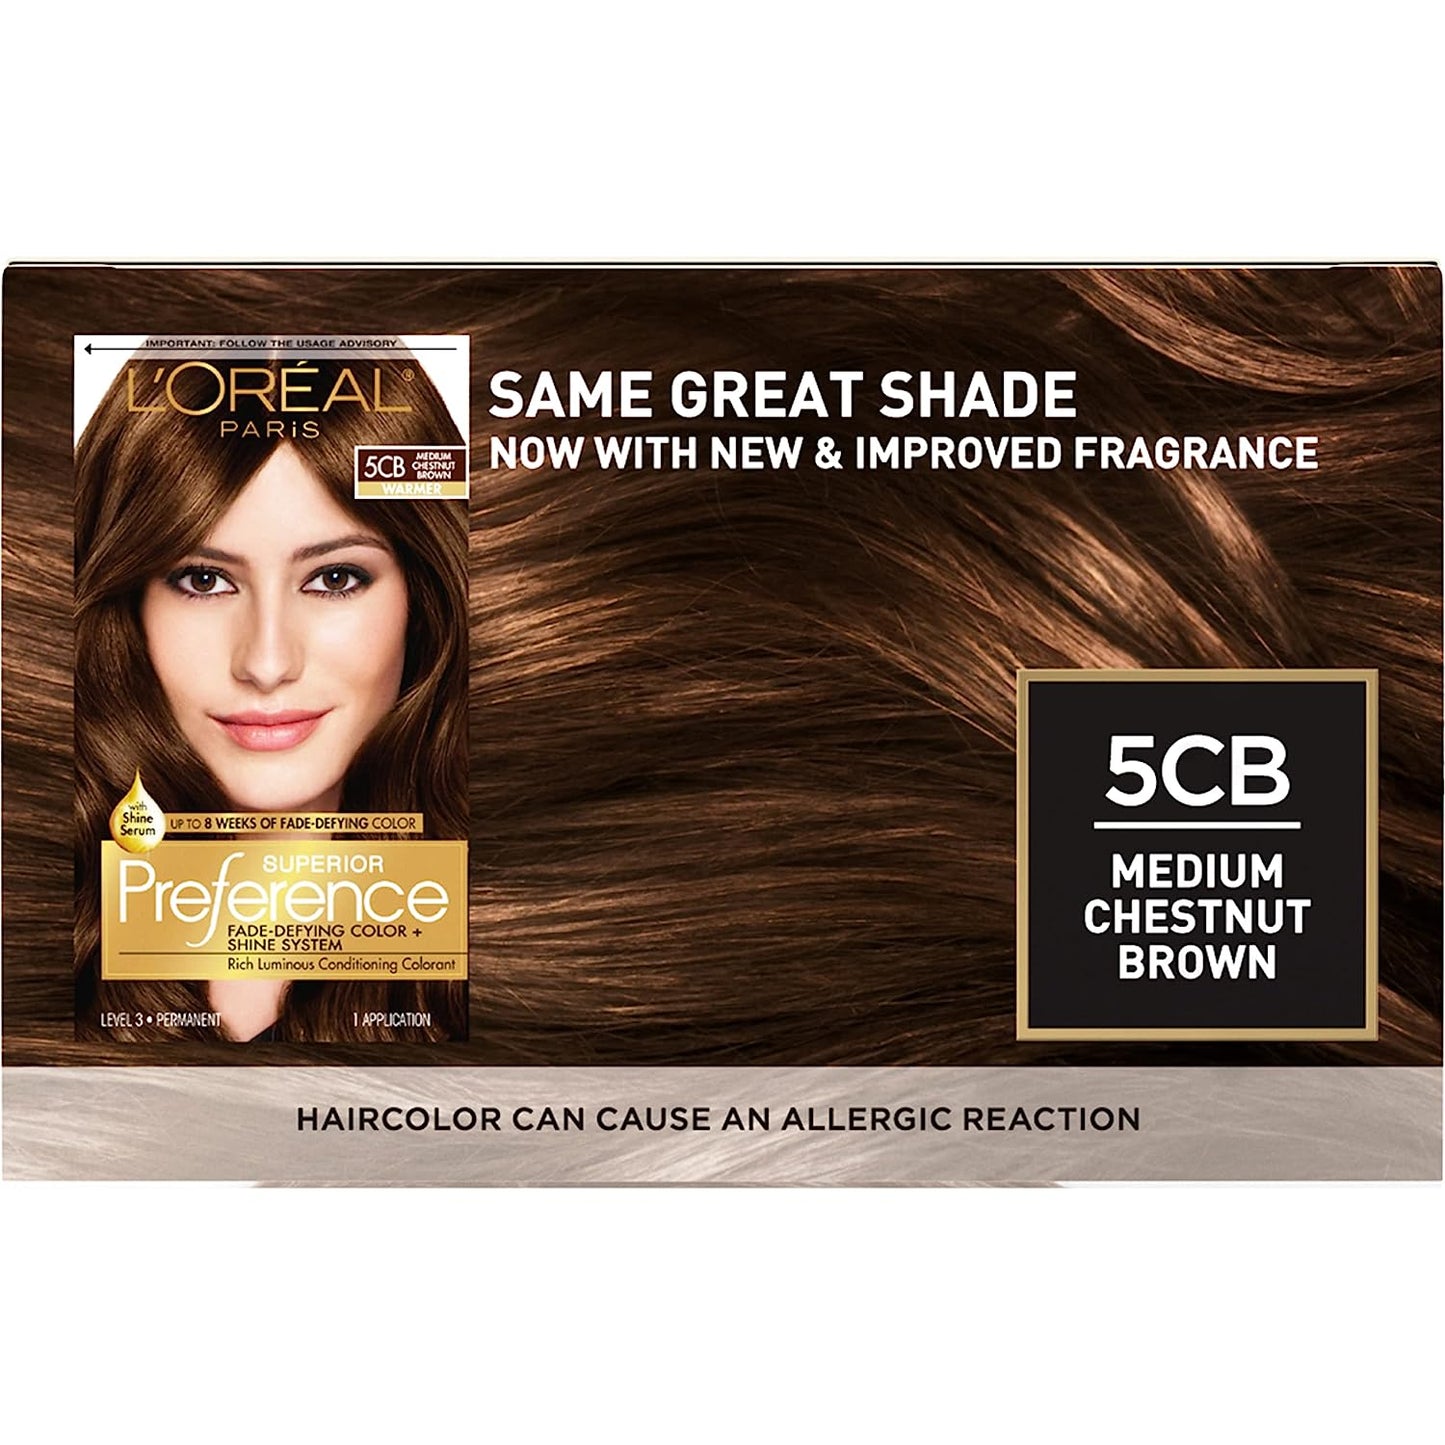 Loreal Paris Superior Preference Luminous Fade Defying Color Permanent Hair Color 1 Application